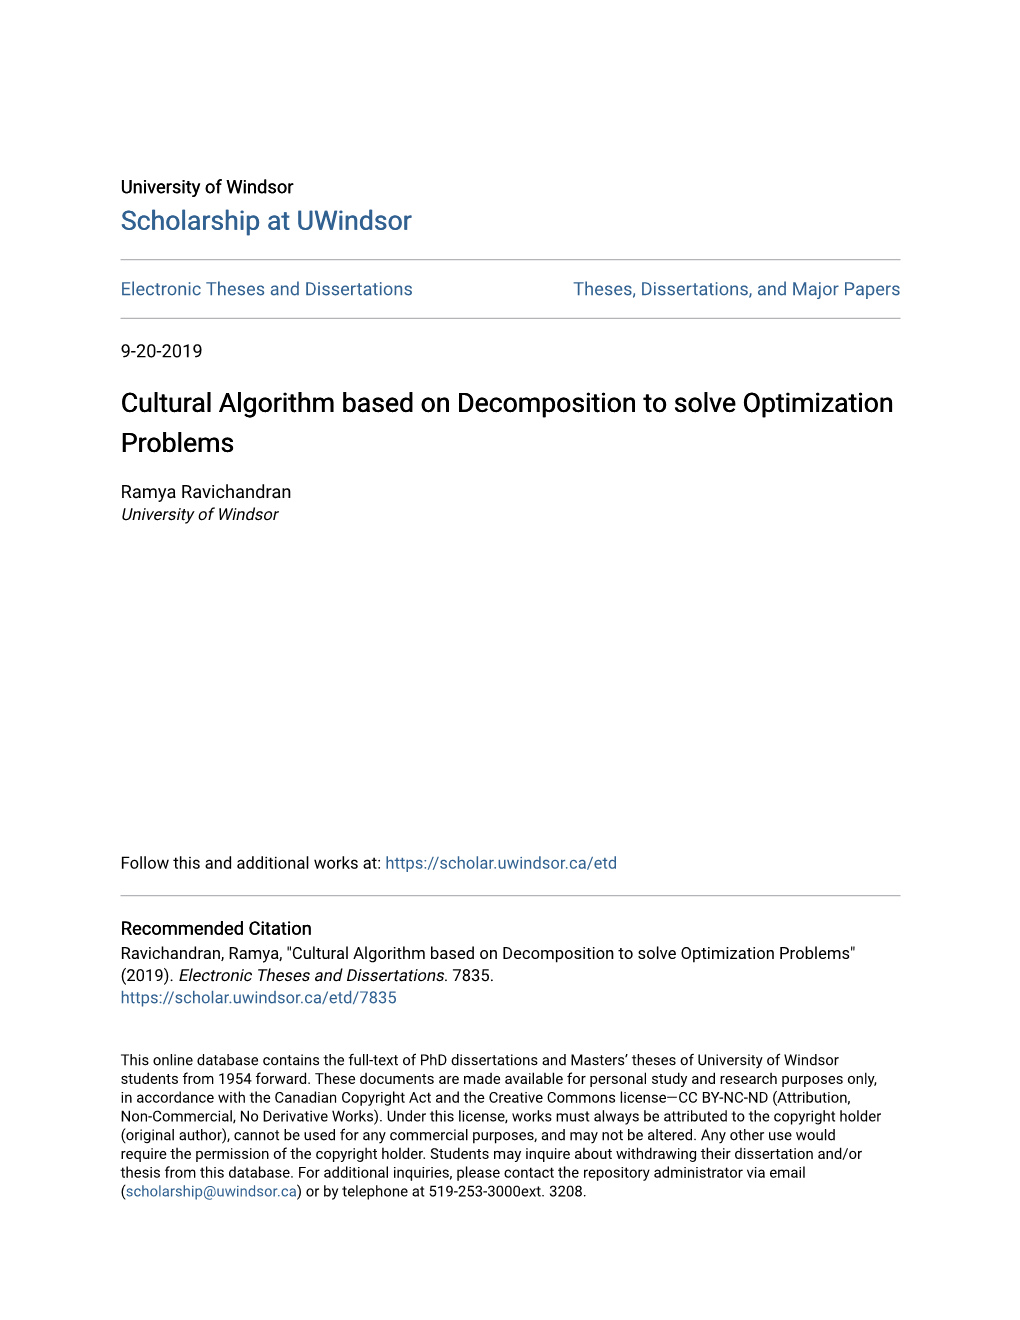 Cultural Algorithm Based on Decomposition to Solve Optimization Problems